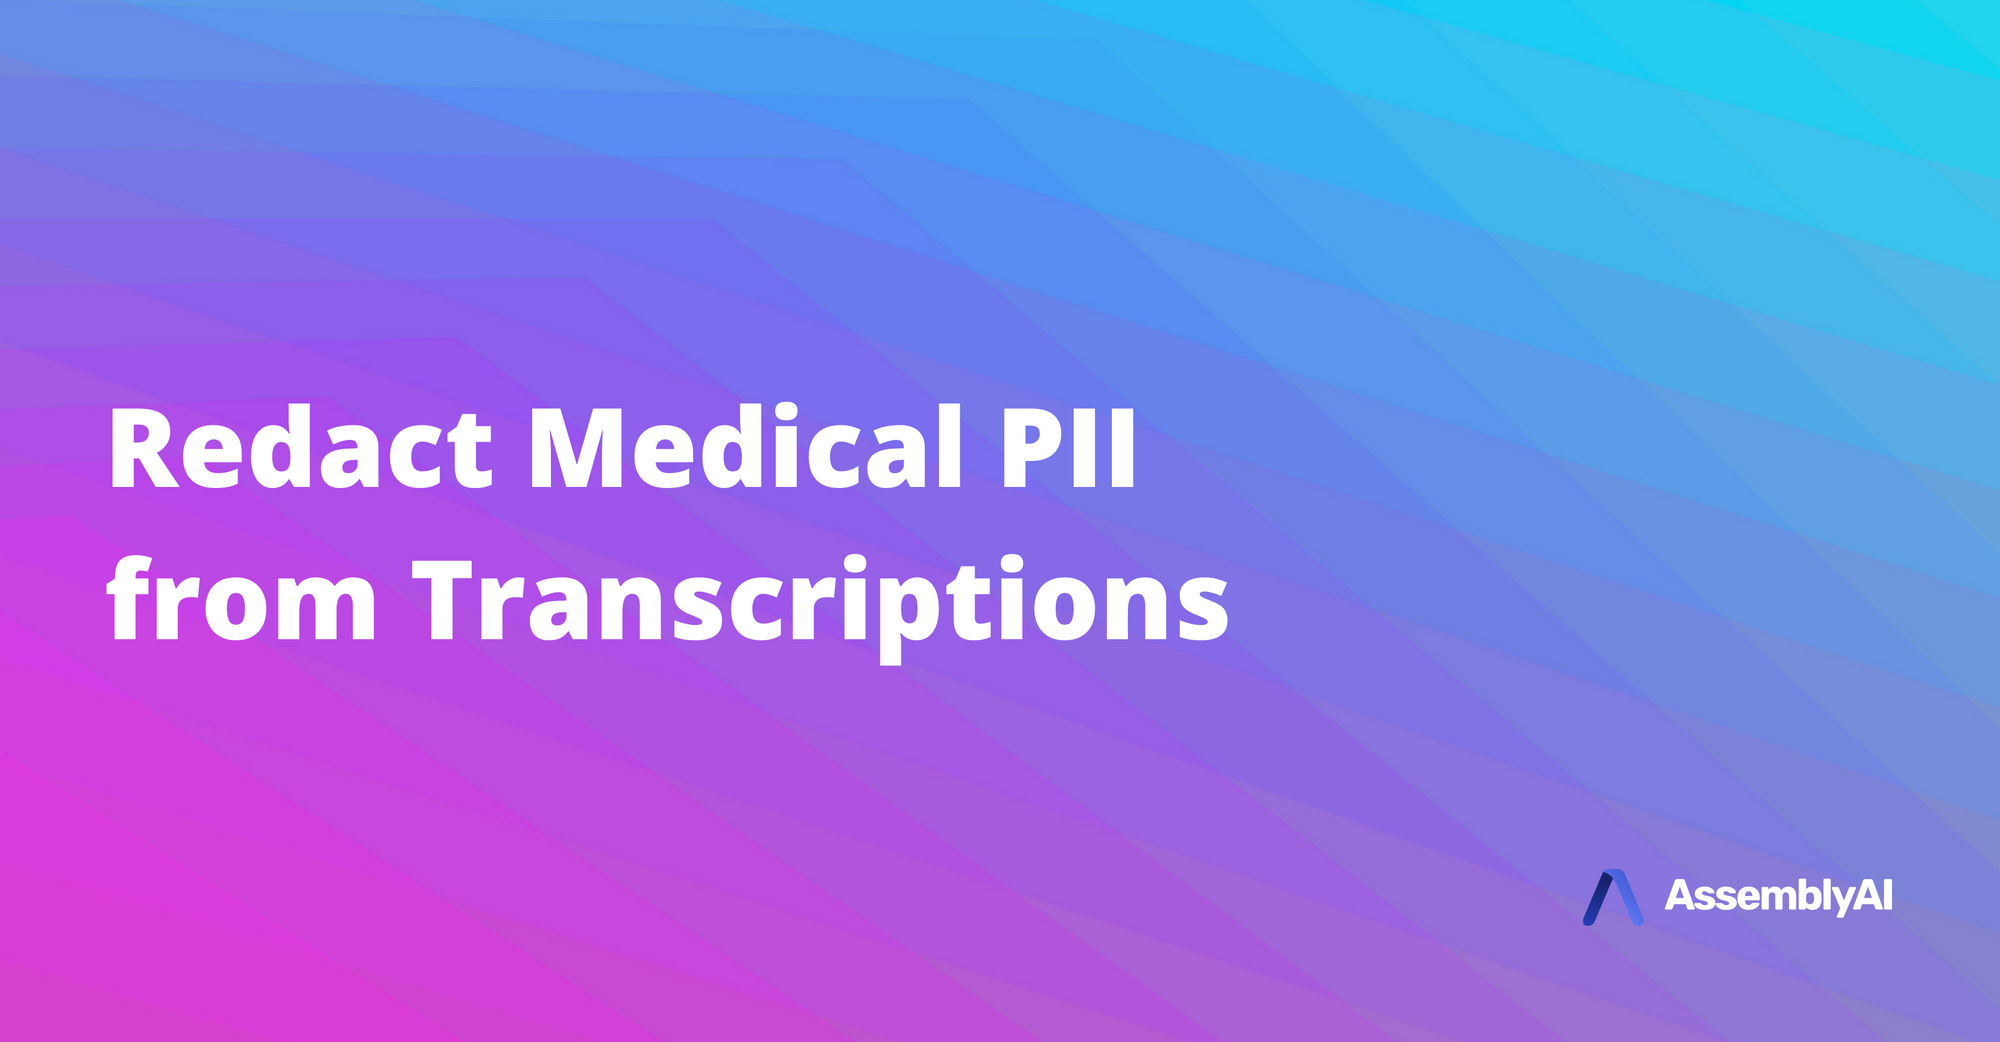 Redacting Sensitive Medical Information from Transcriptions